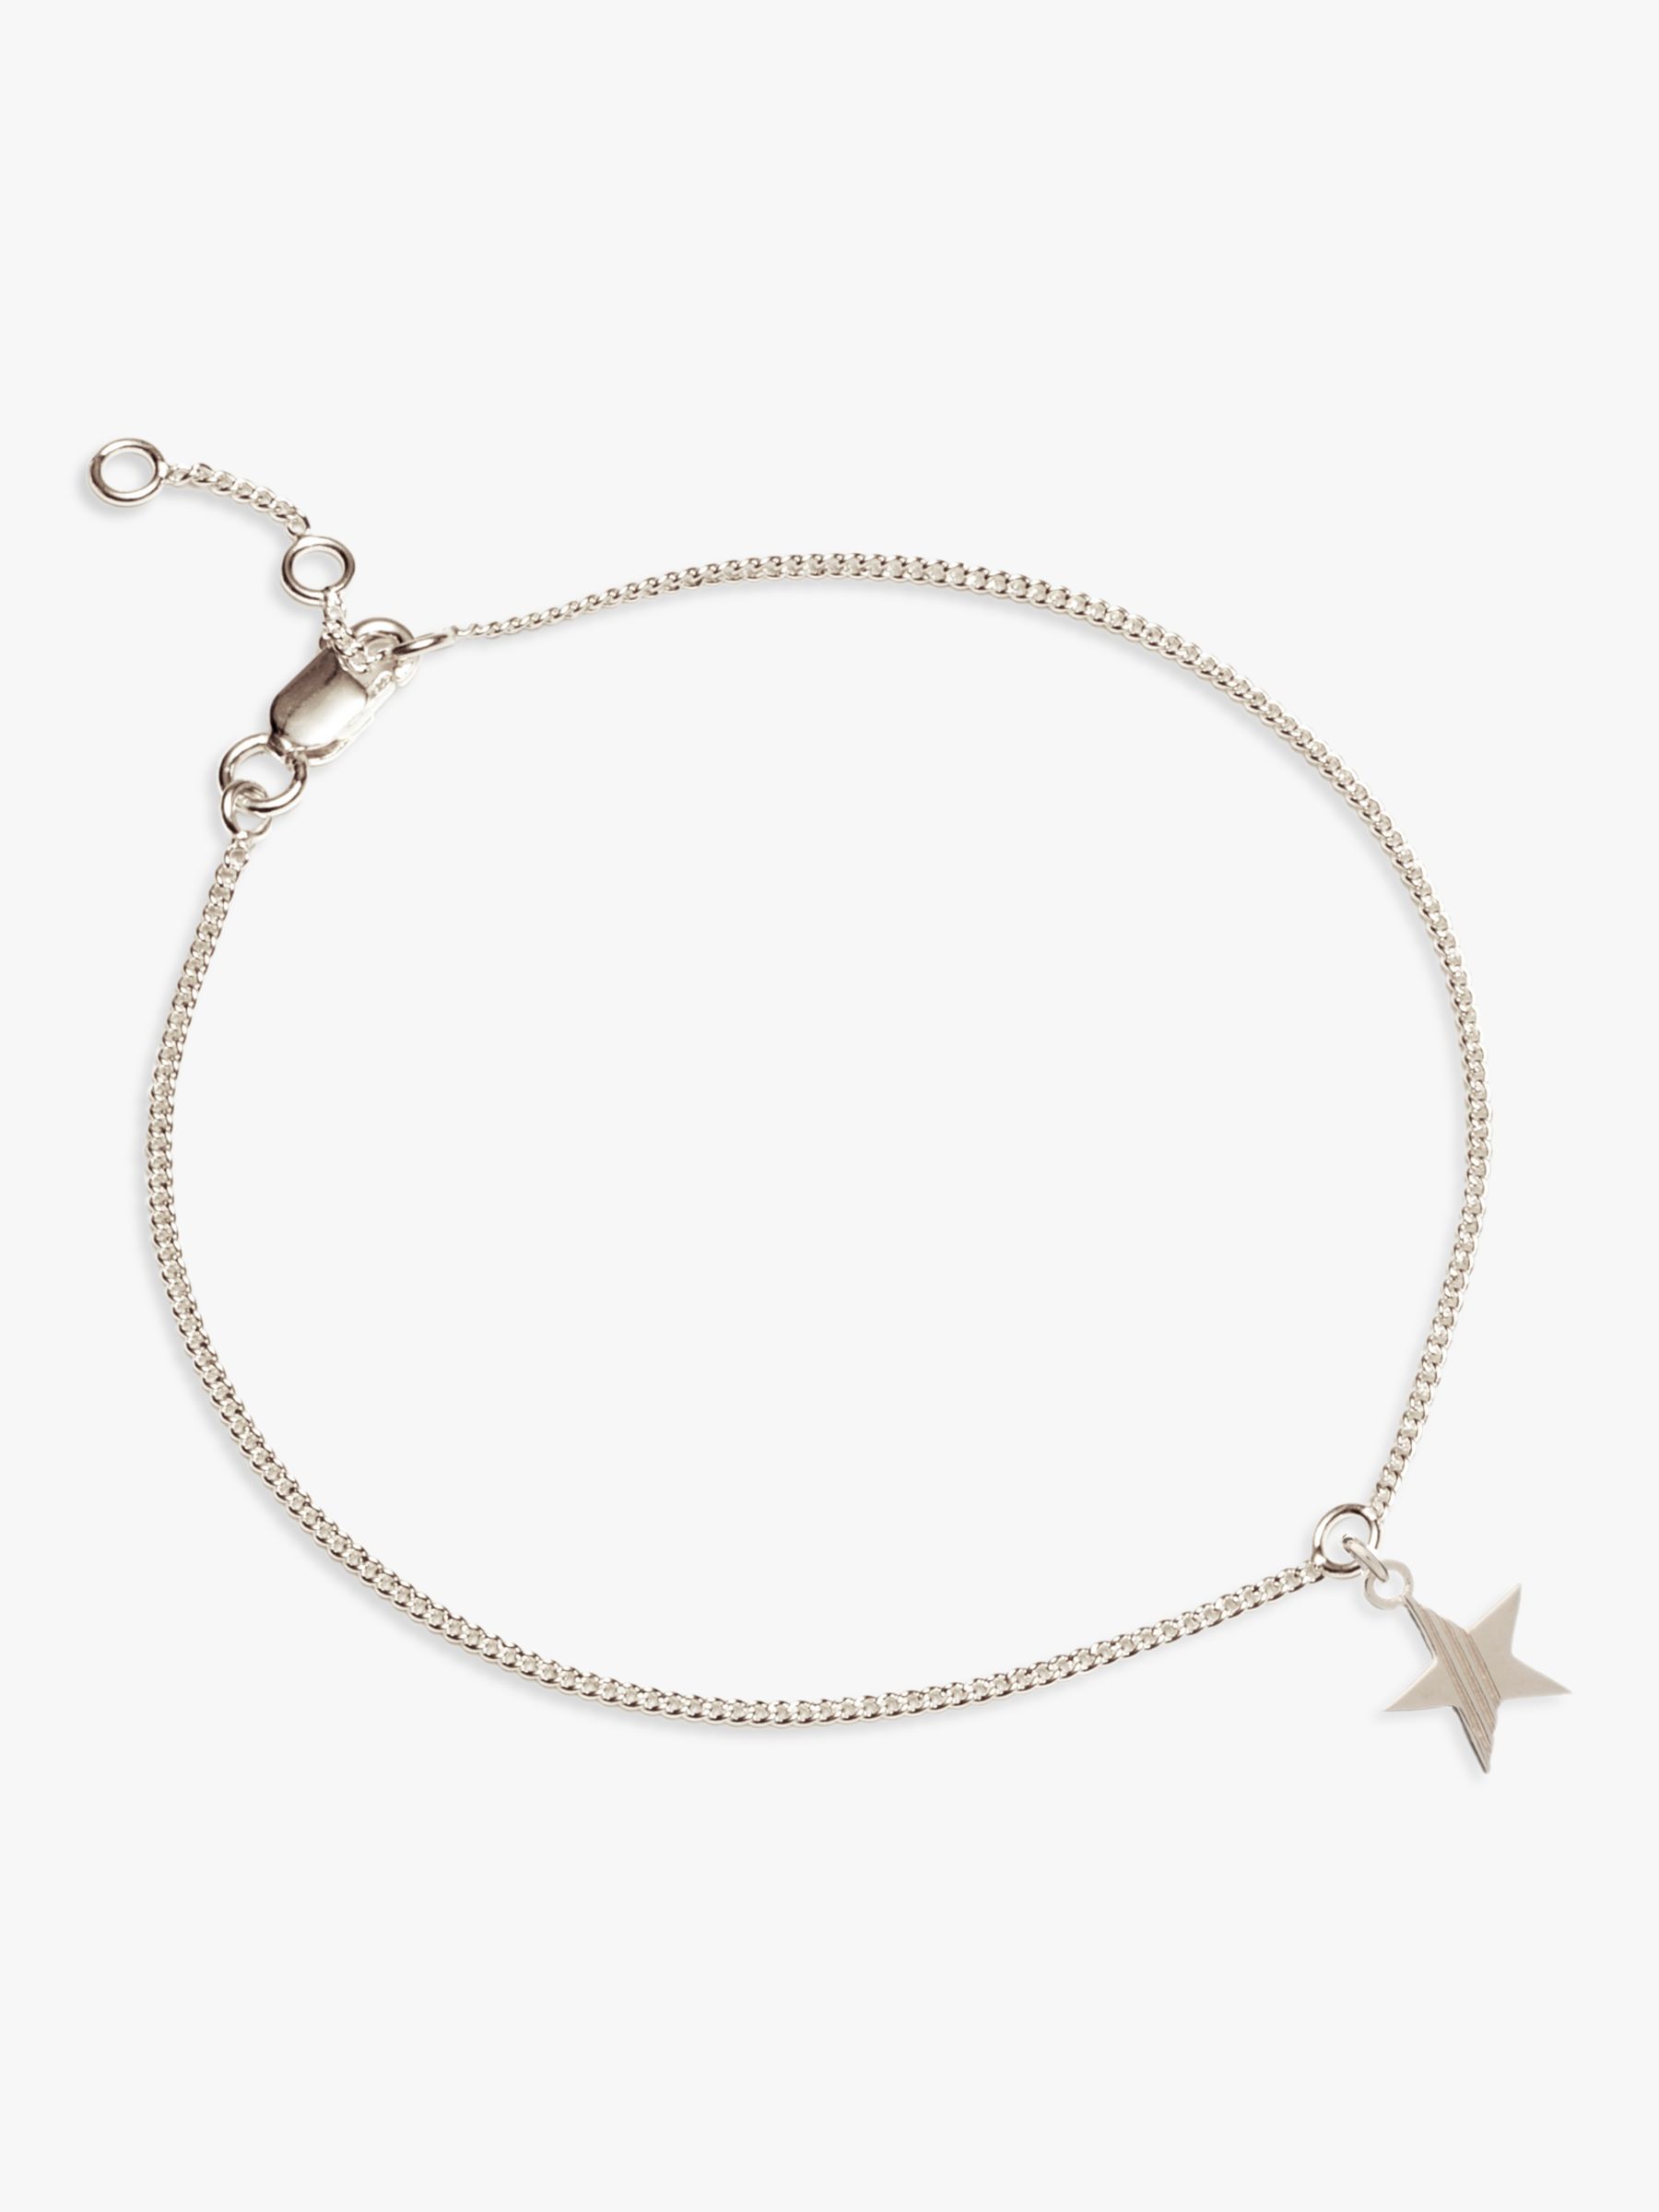 Rachel Jackson London Star Chain Bracelet, Silver